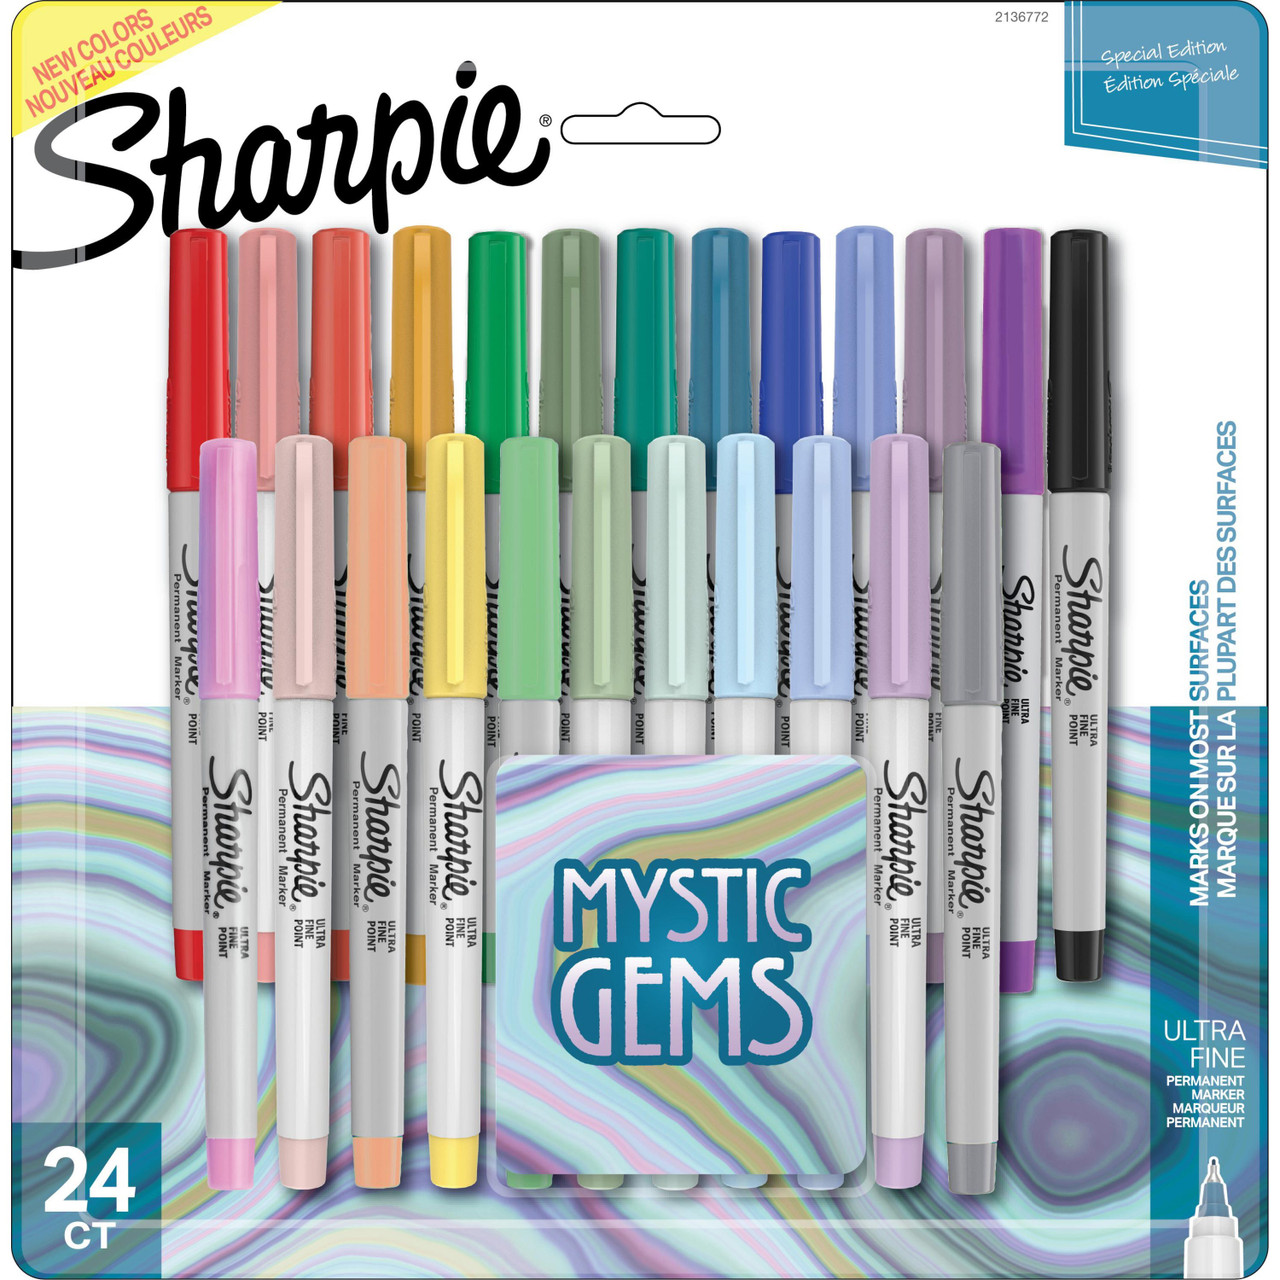 Sharpie Mystic Gems Permanent Markers (2136777)